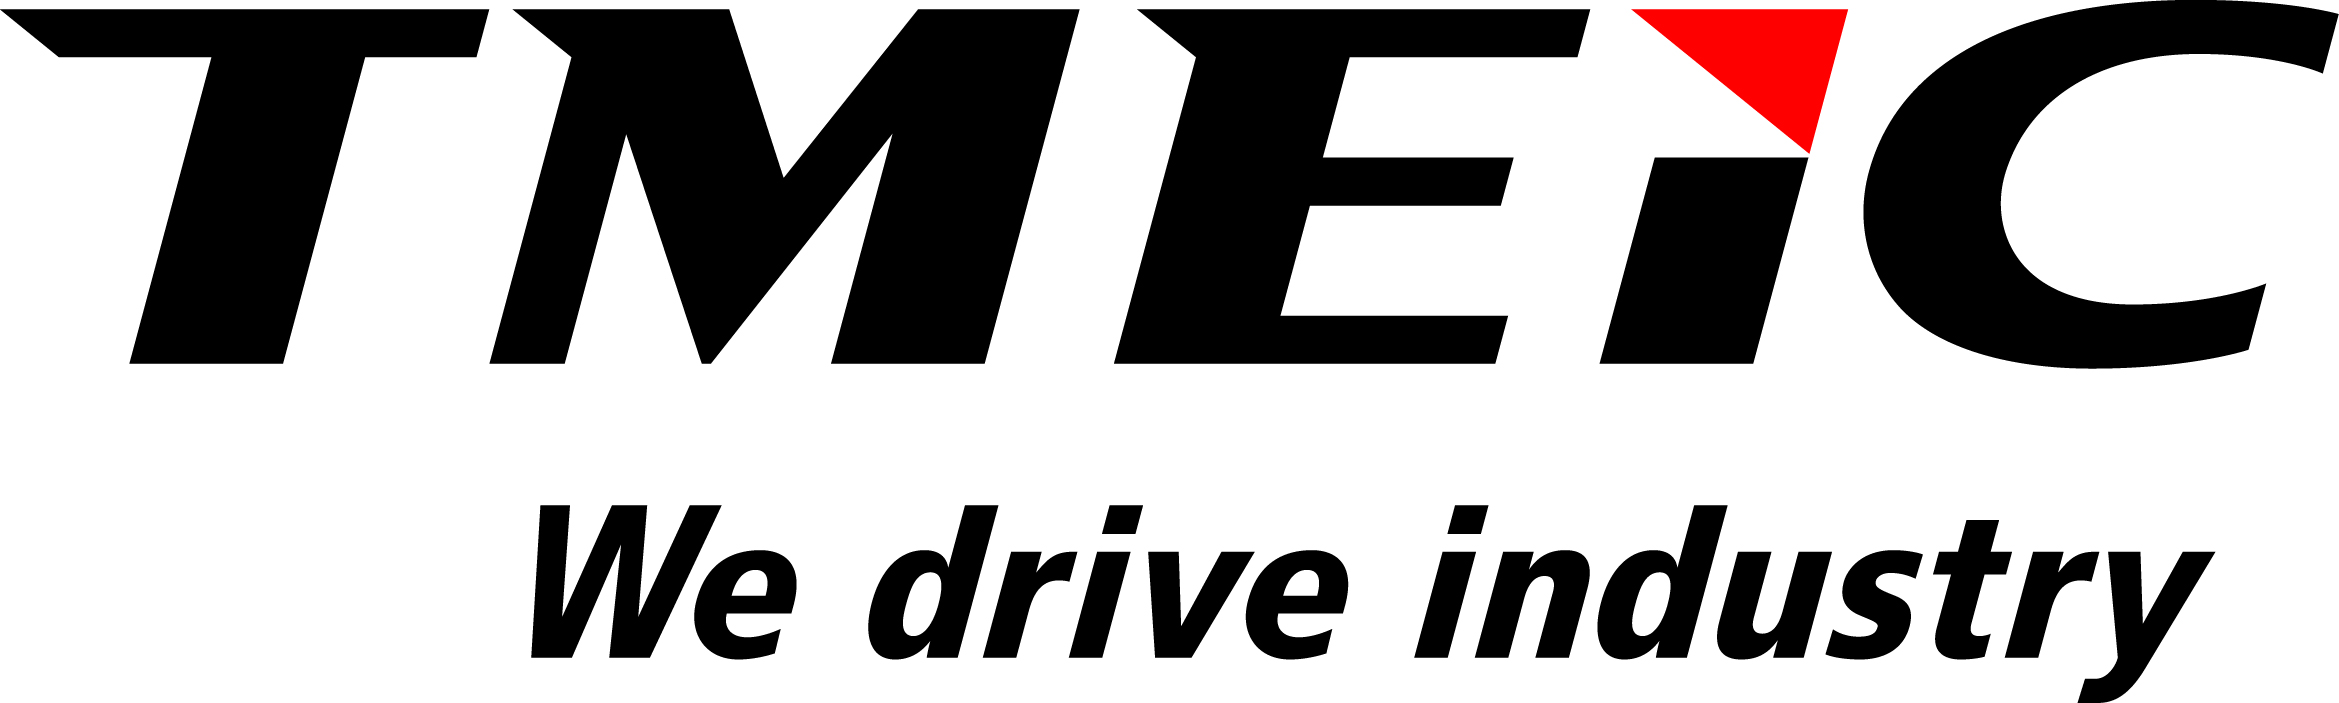 TMEIC Logo-tag